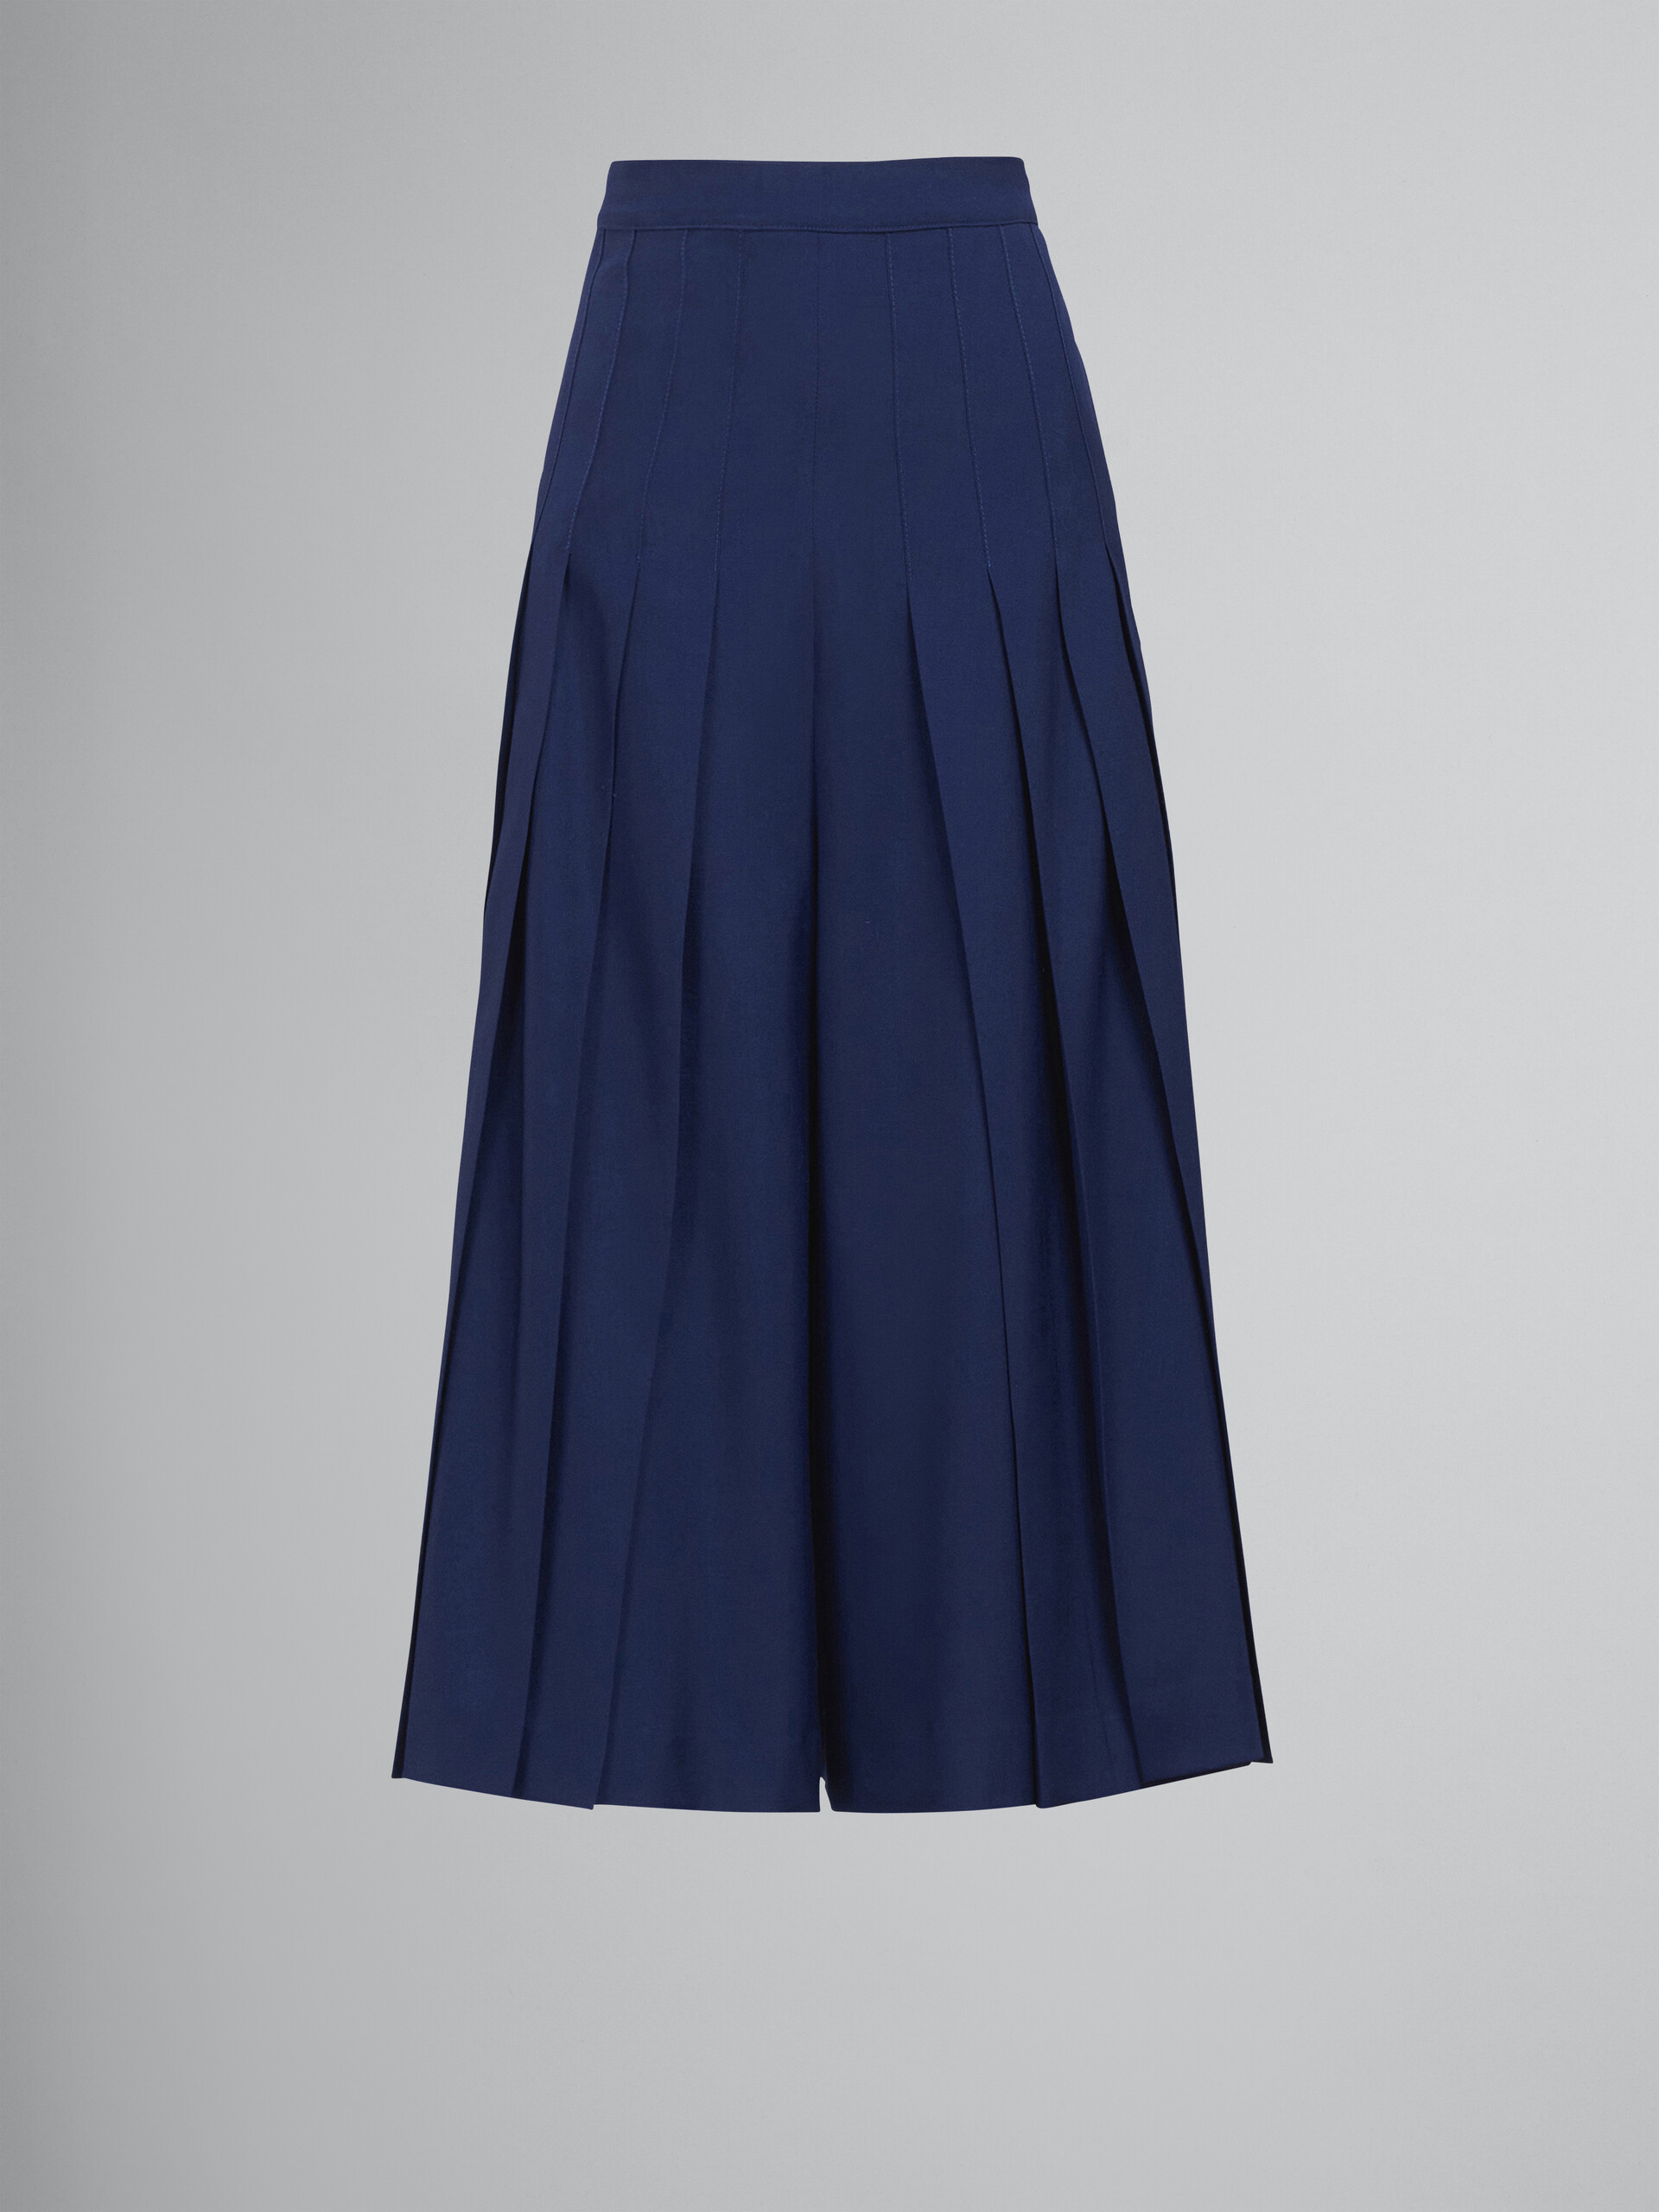 Blue tropical wool culottes - Pants - Image 1